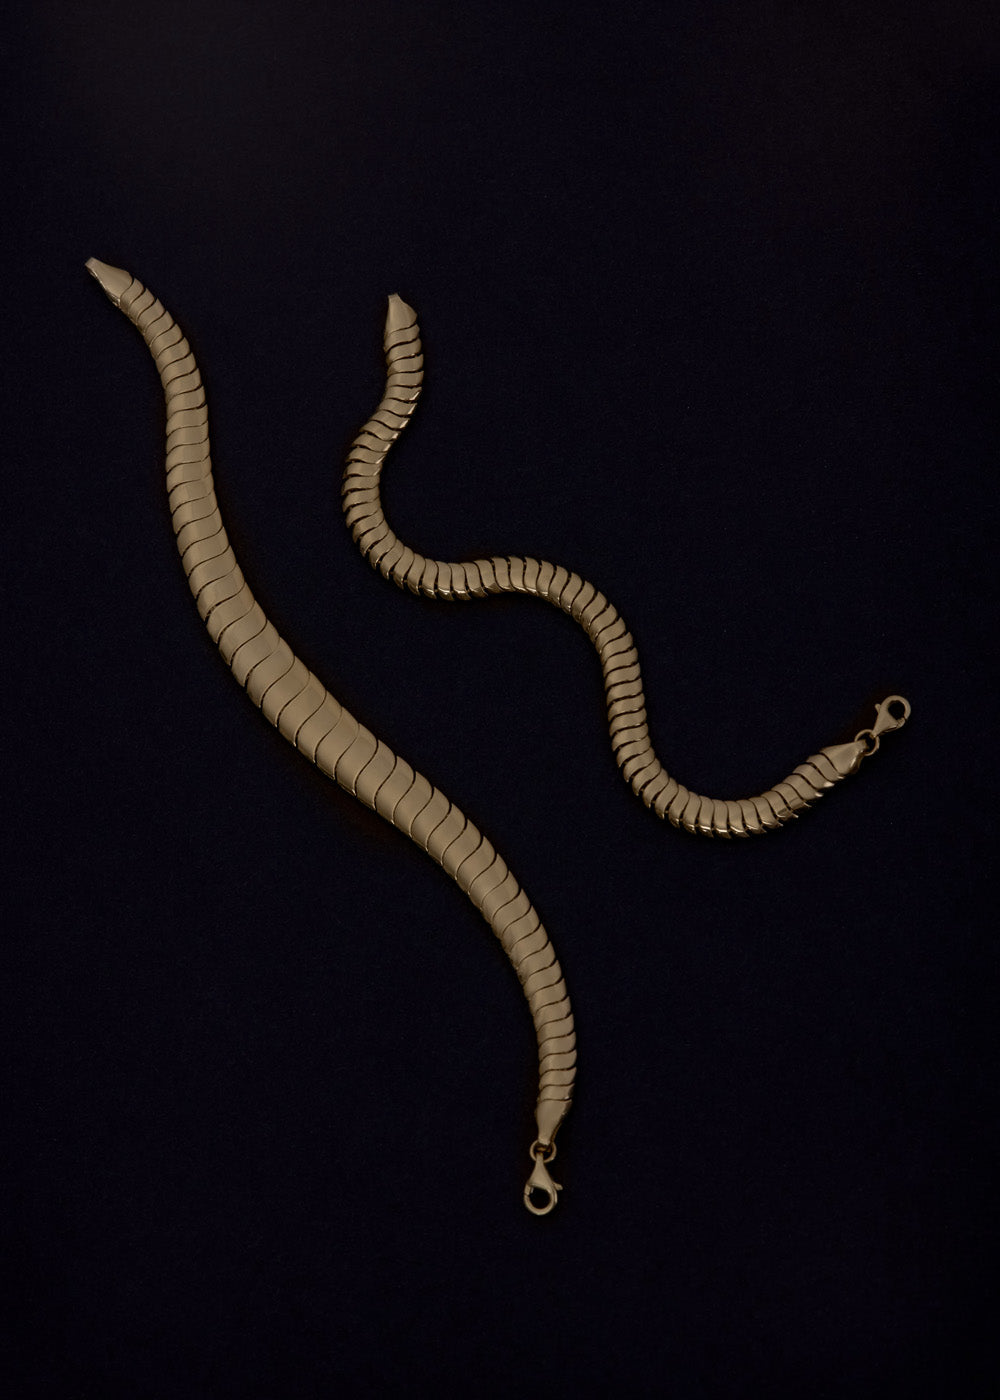 alt="Cobra Chain Bracelet I"